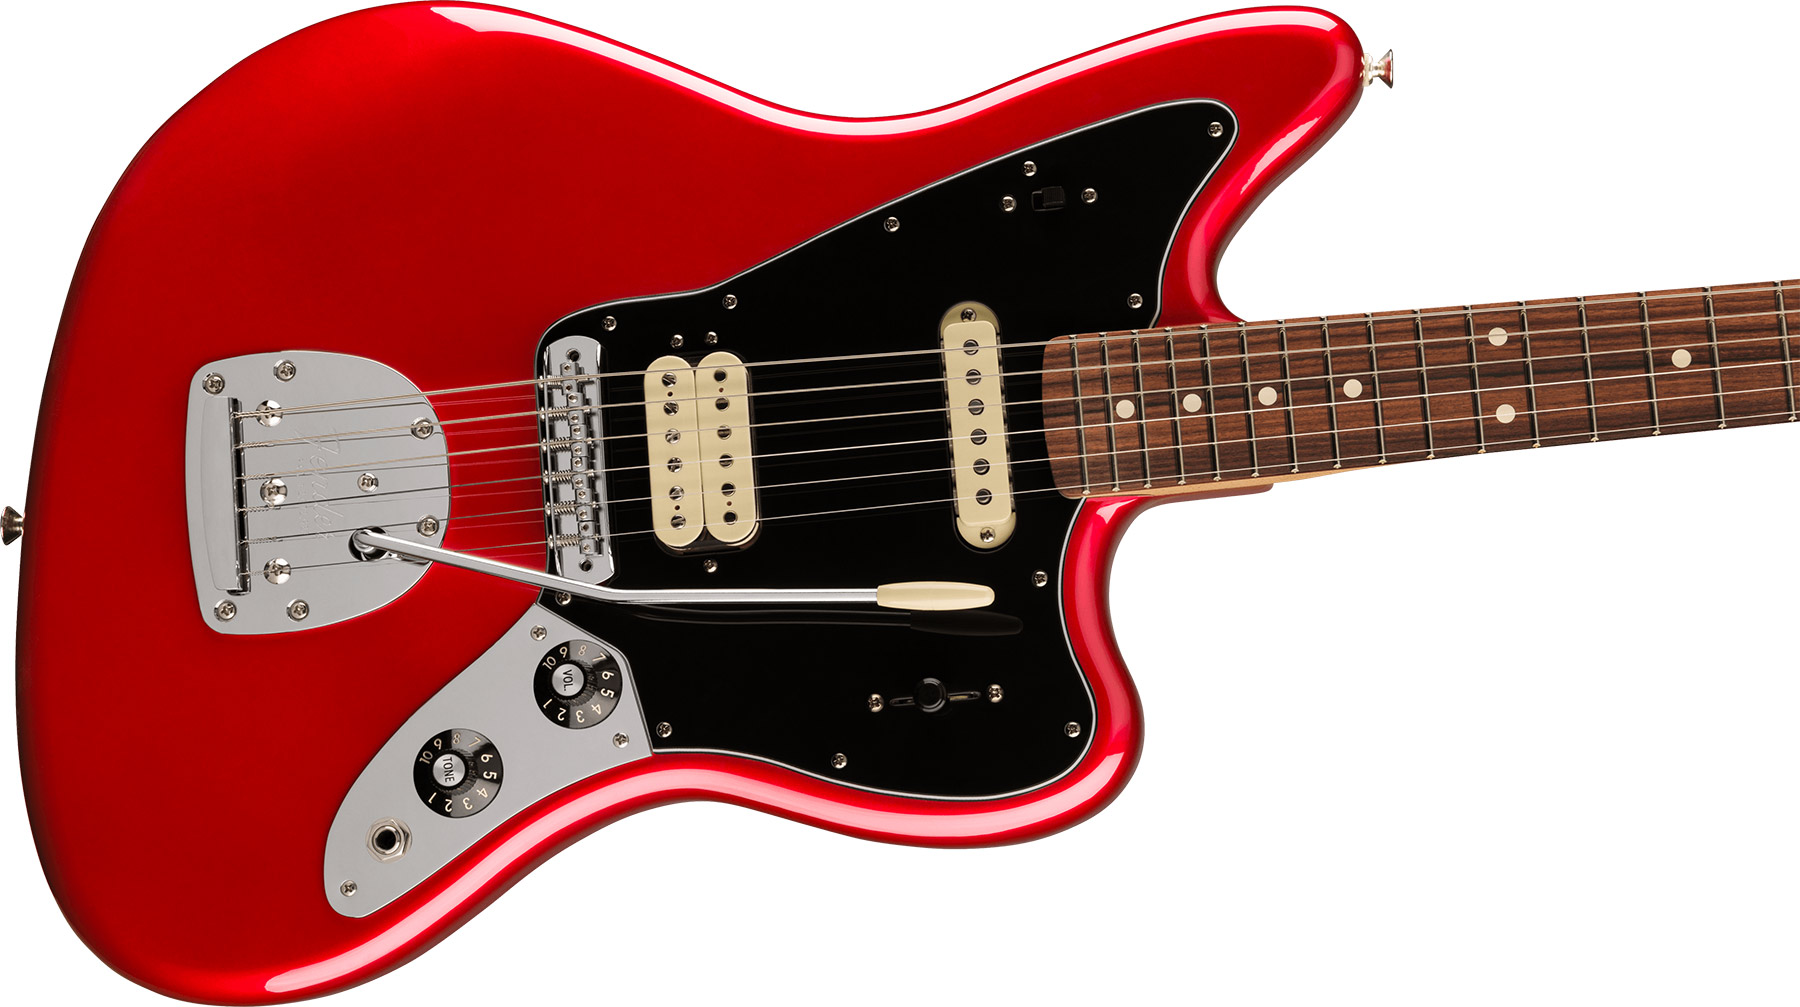 Fender Jaguar Player Mex 2023 Hs Trem Pf - Candy Apple Red - Retro rock electric guitar - Variation 2